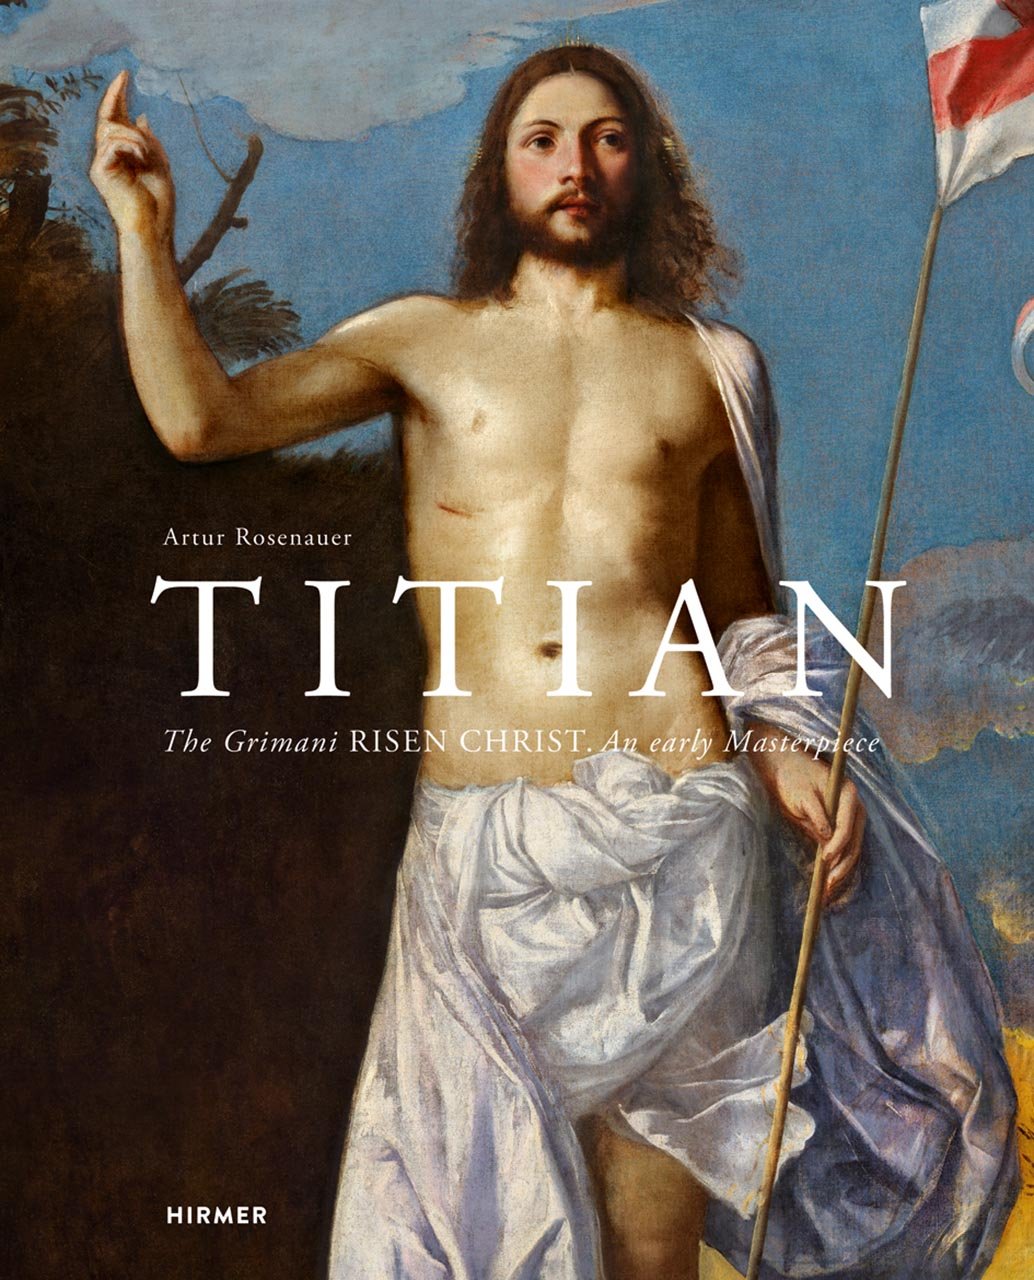 Titian The Grimani - Risen Christ